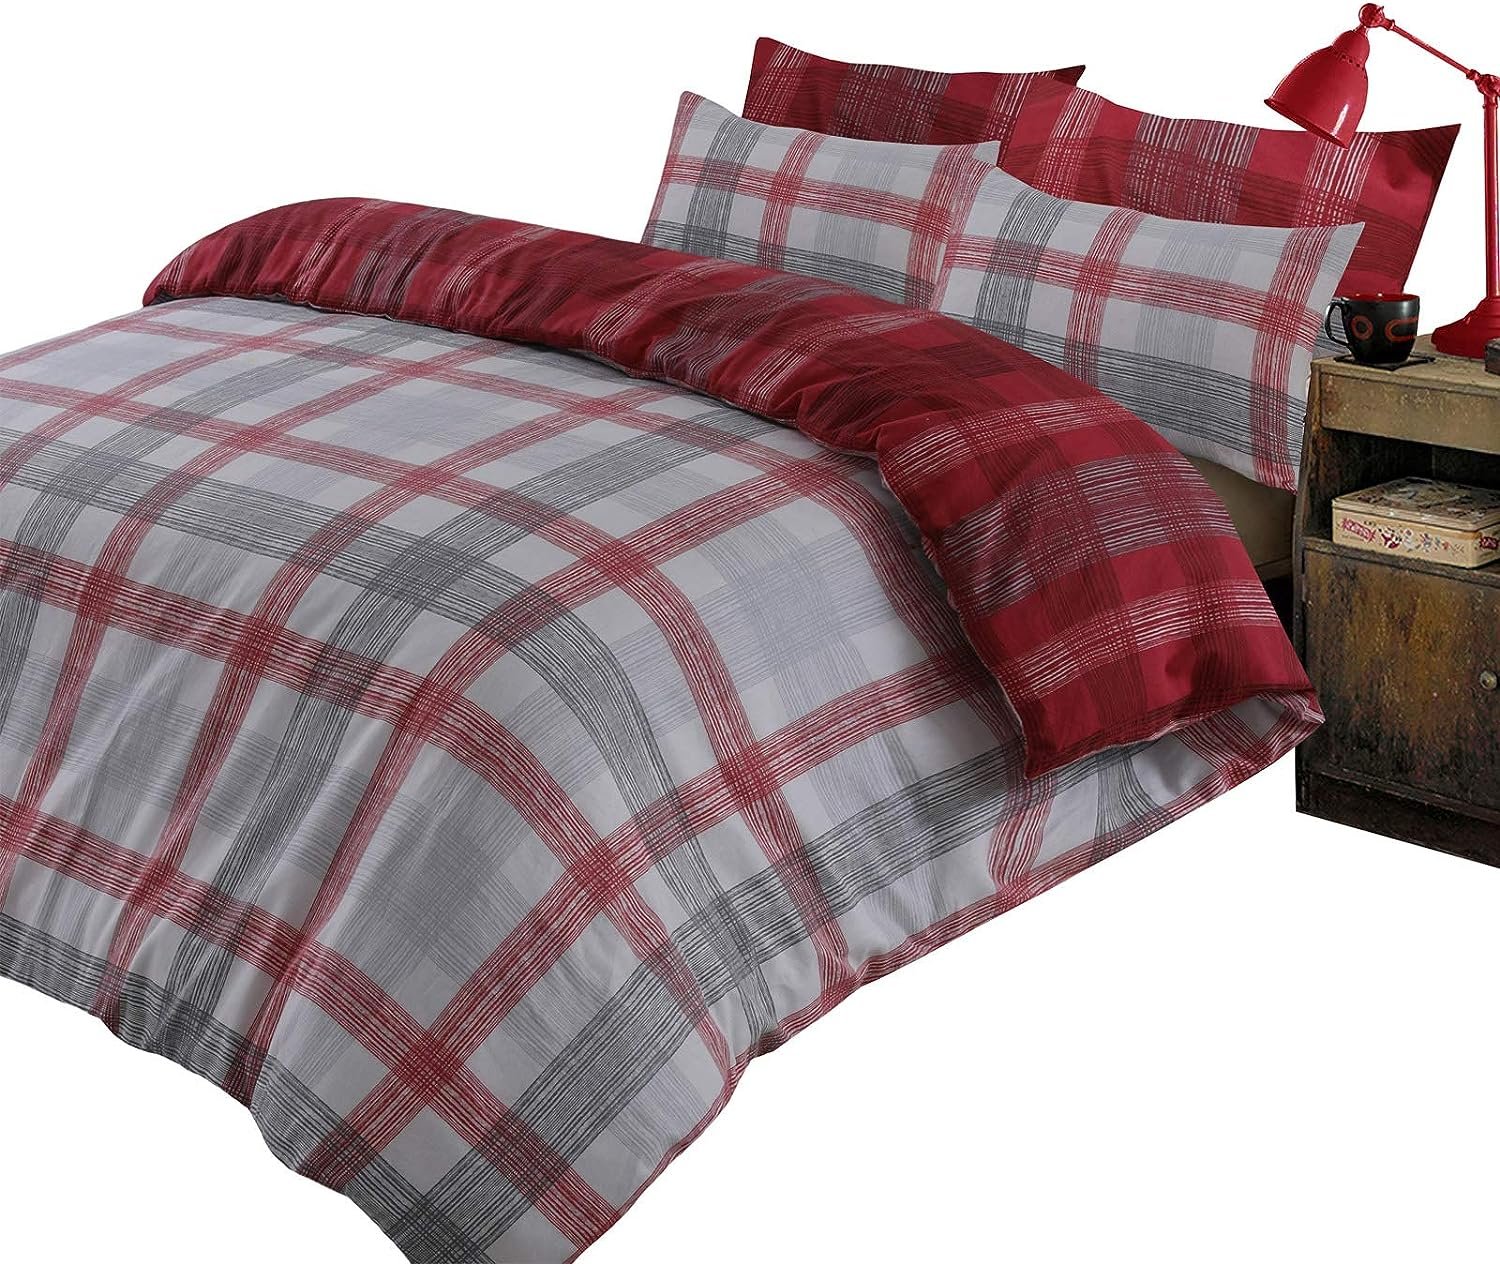 Dreamscene Bed Linen Set Polyester Double Review